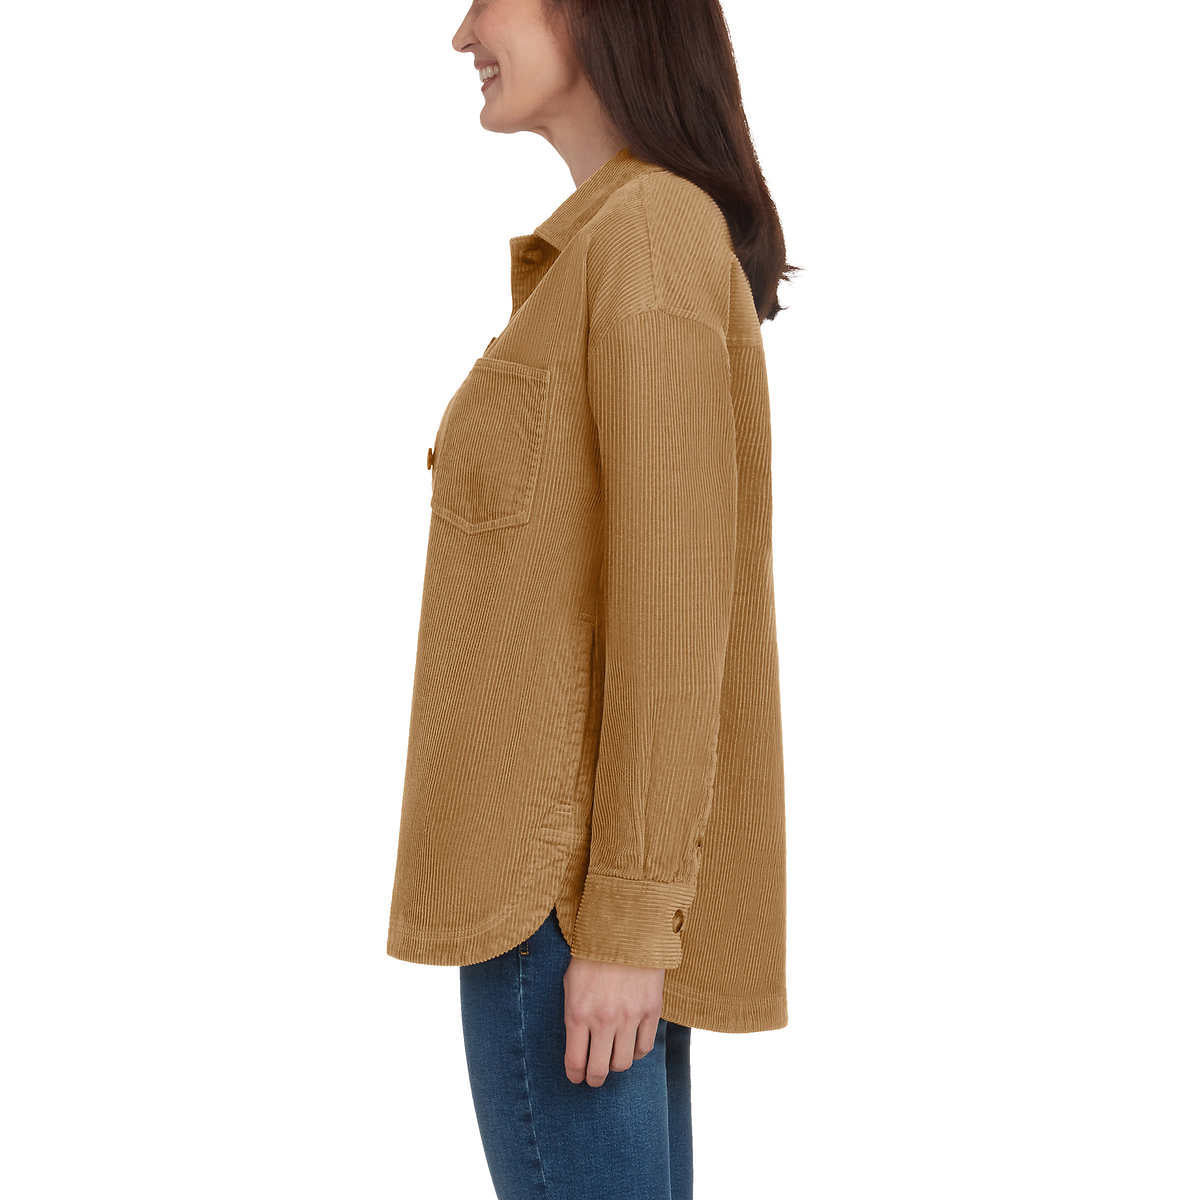 Matty M Women's Corduroy Cotton Blend Relaxed Fit Button Up Shirt Jacket